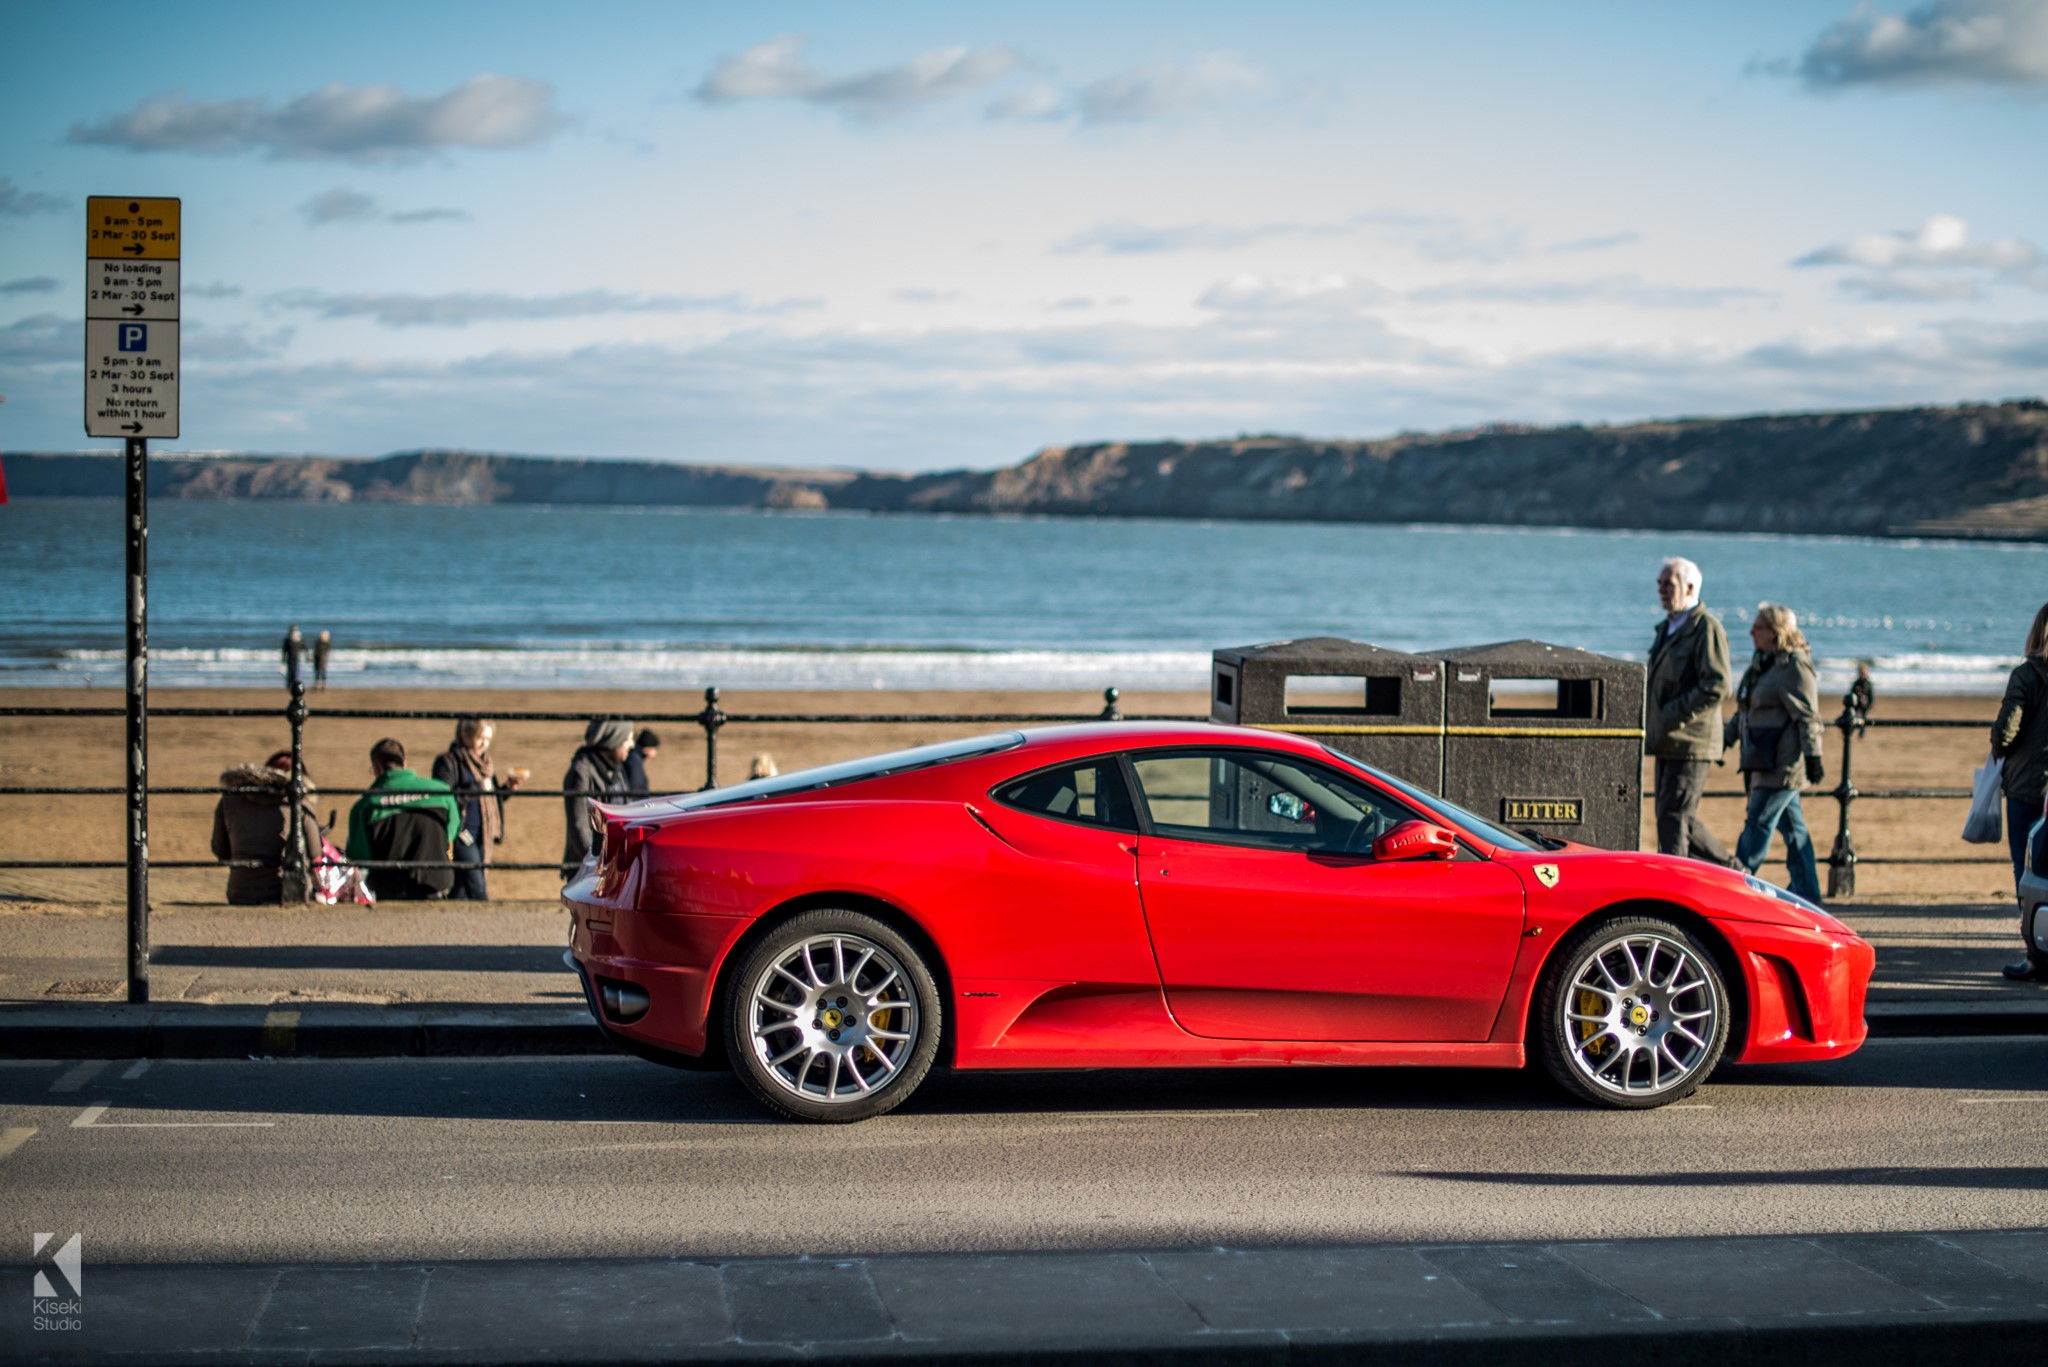 Ferrari F430 on Scarborough seafront